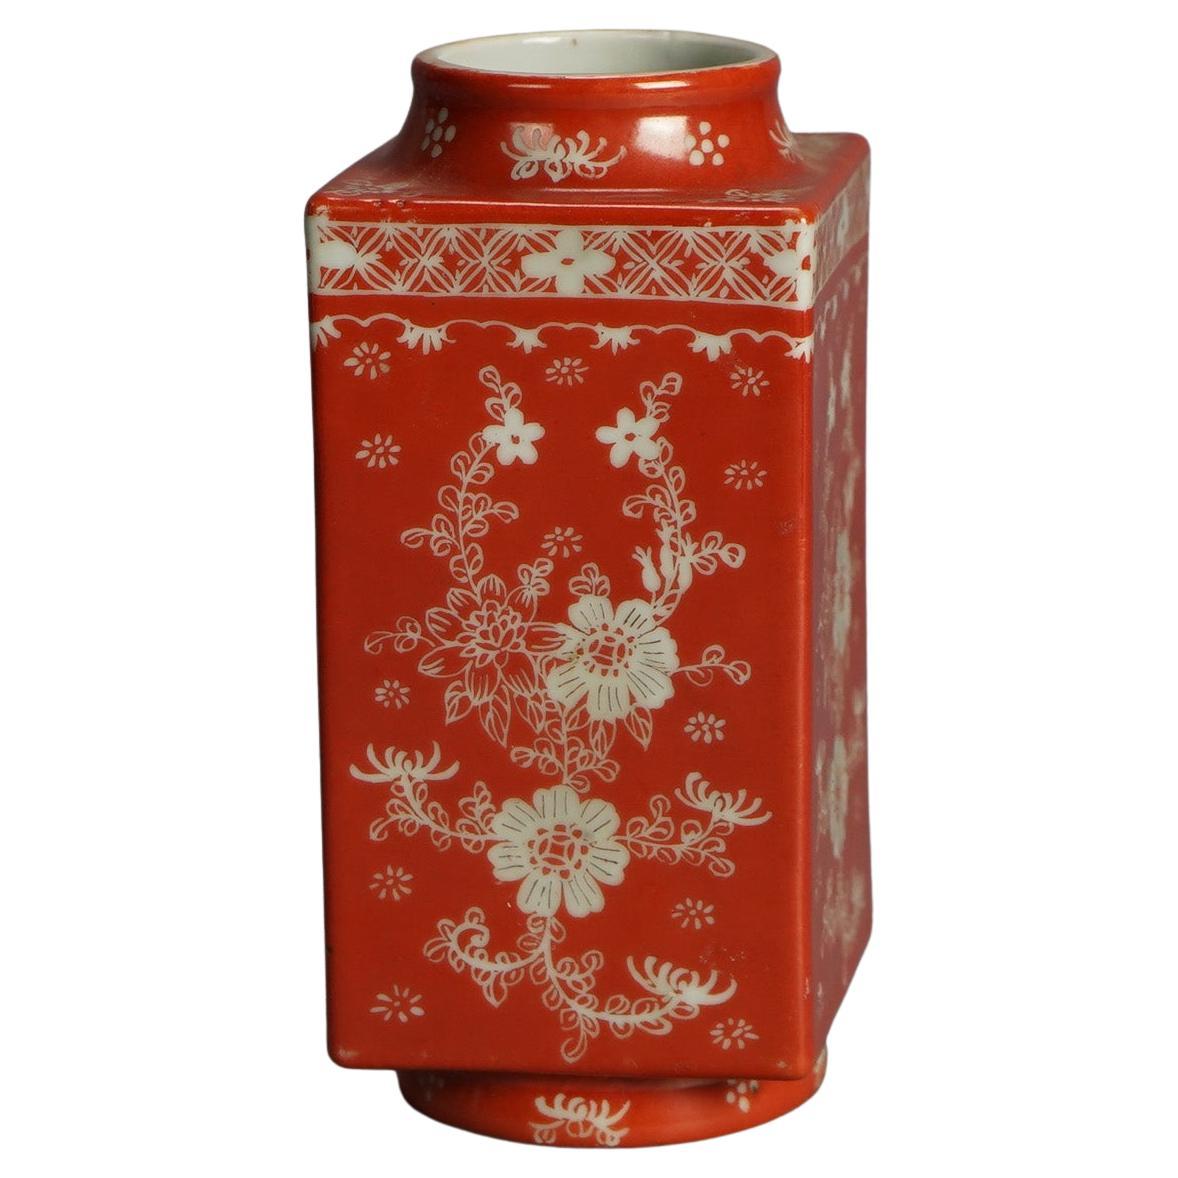 Antique Chinese Porcelain Vase, Orange with Floral Design C1920